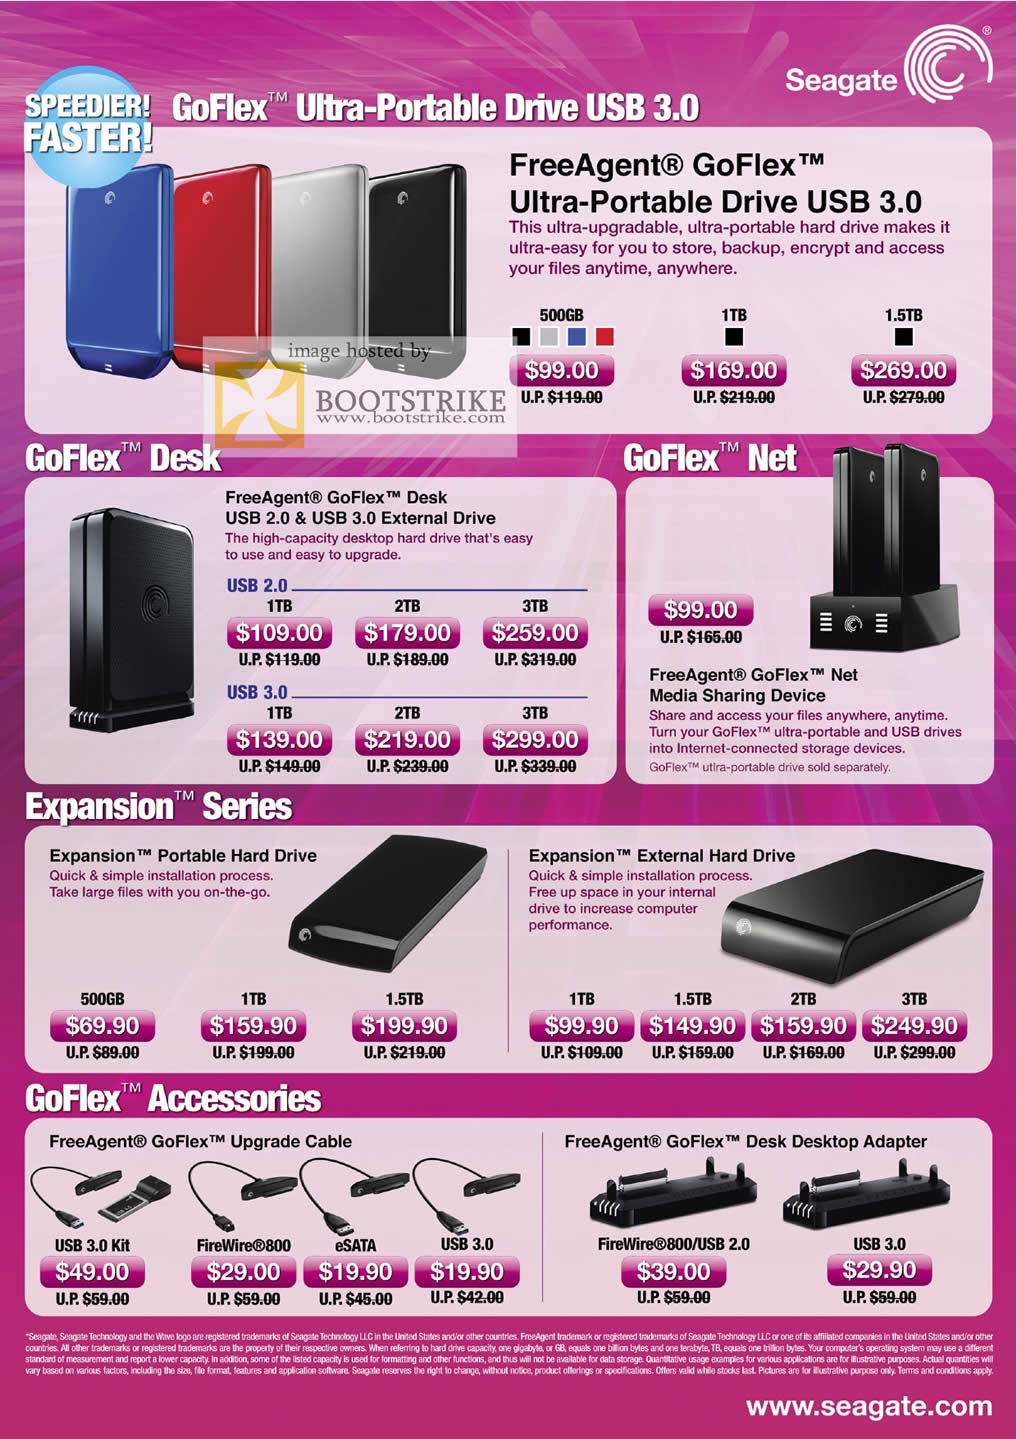 IT Show 2011 price list image brochure of Seagate FreeAgent GoFlex External Storage USB 3 Desk Net Expansion Desktop Adapter